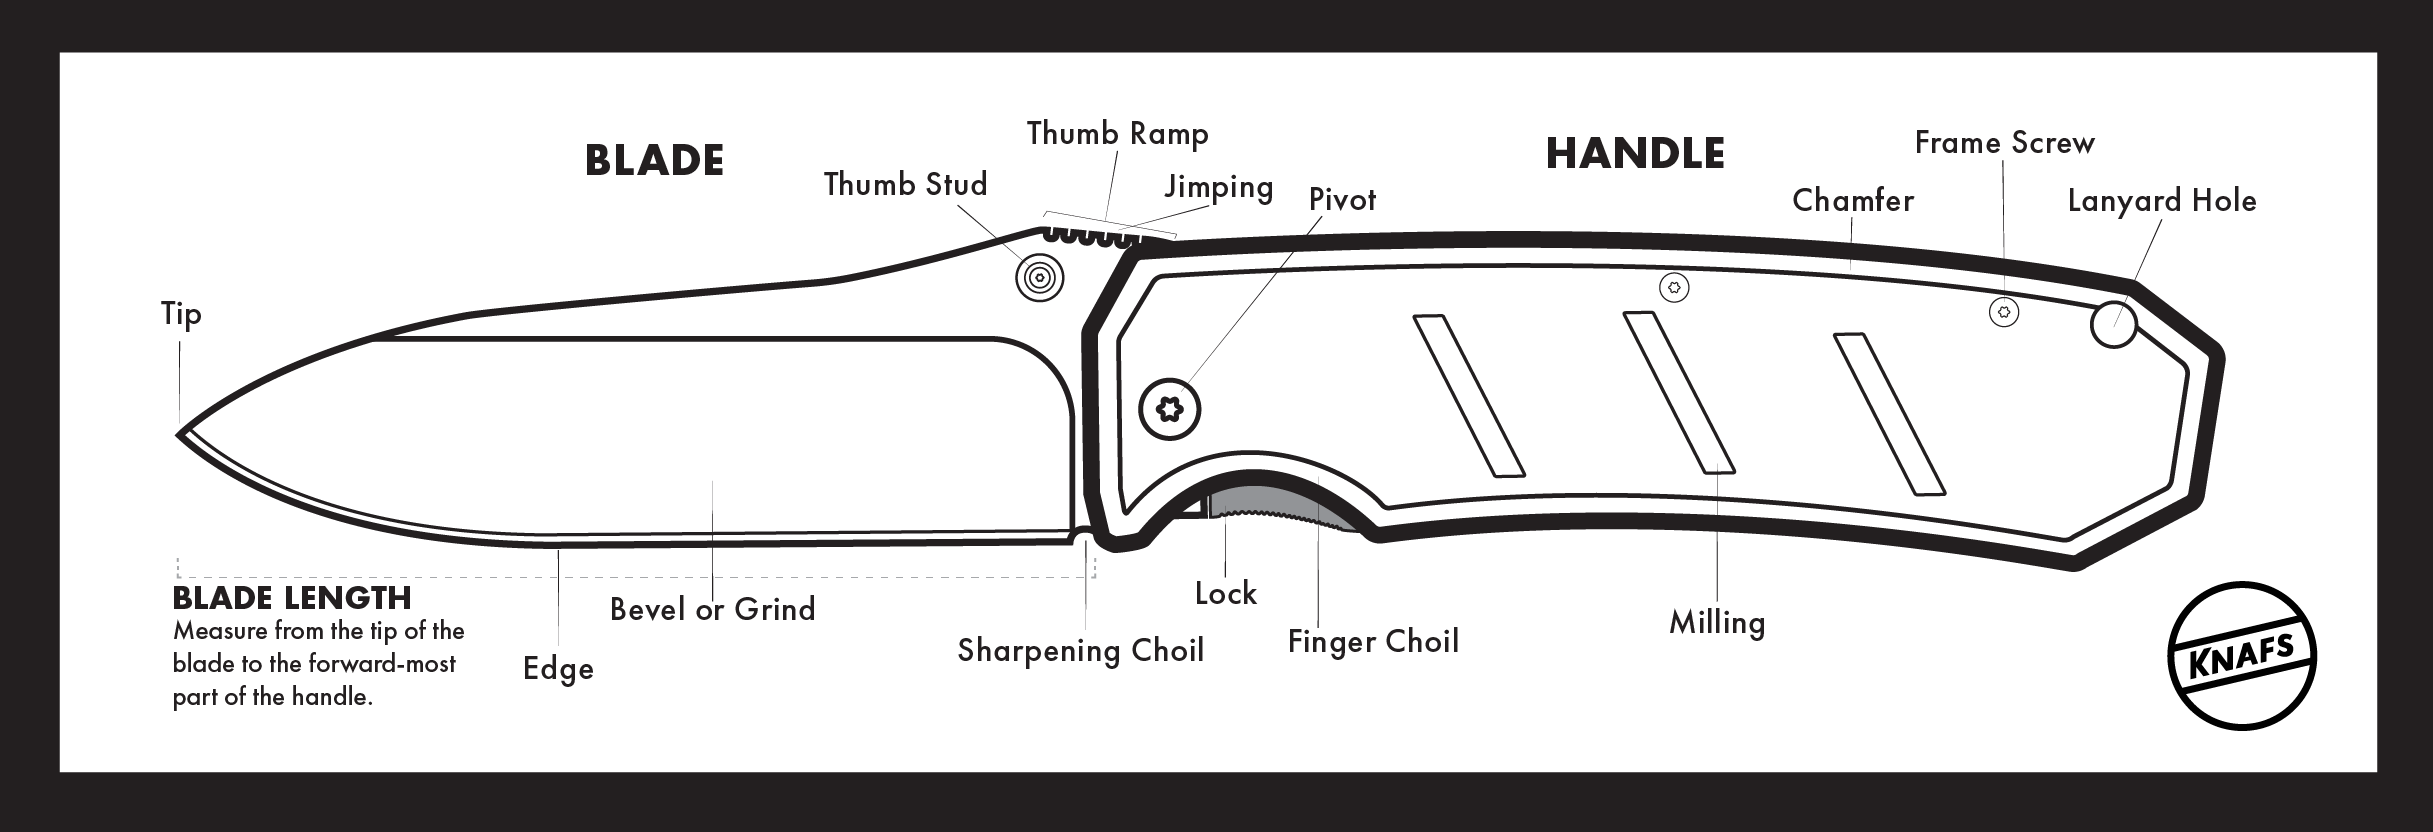 pocket knife anatomy blade and handle